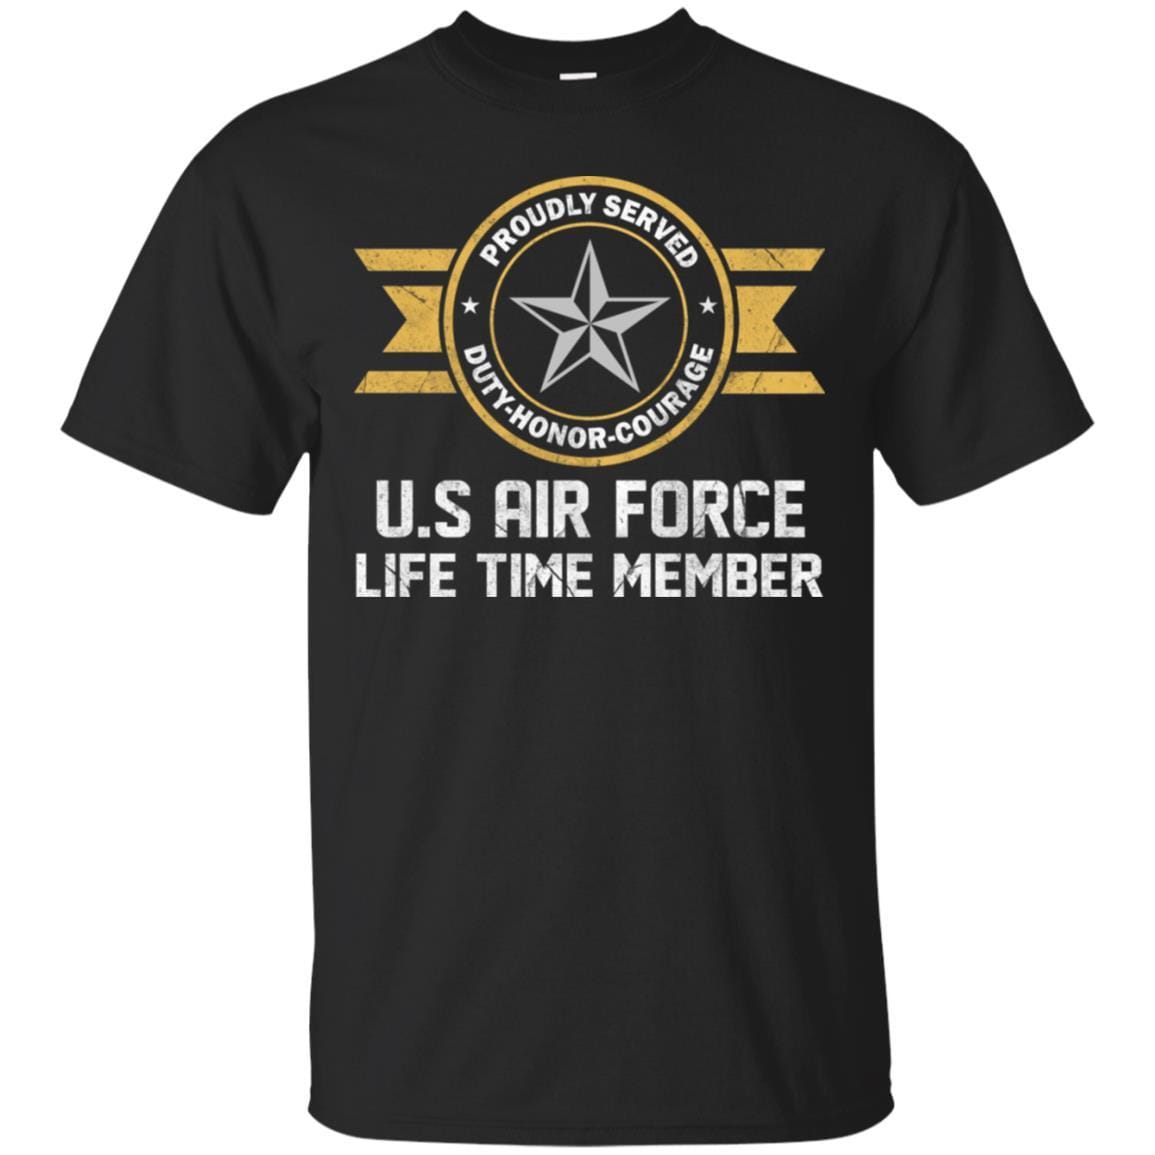 Life time member-US Air Force O-7 Brigadier General Brig O7 General Officer Ranks Men T Shirt On Front-TShirt-USAF-Veterans Nation